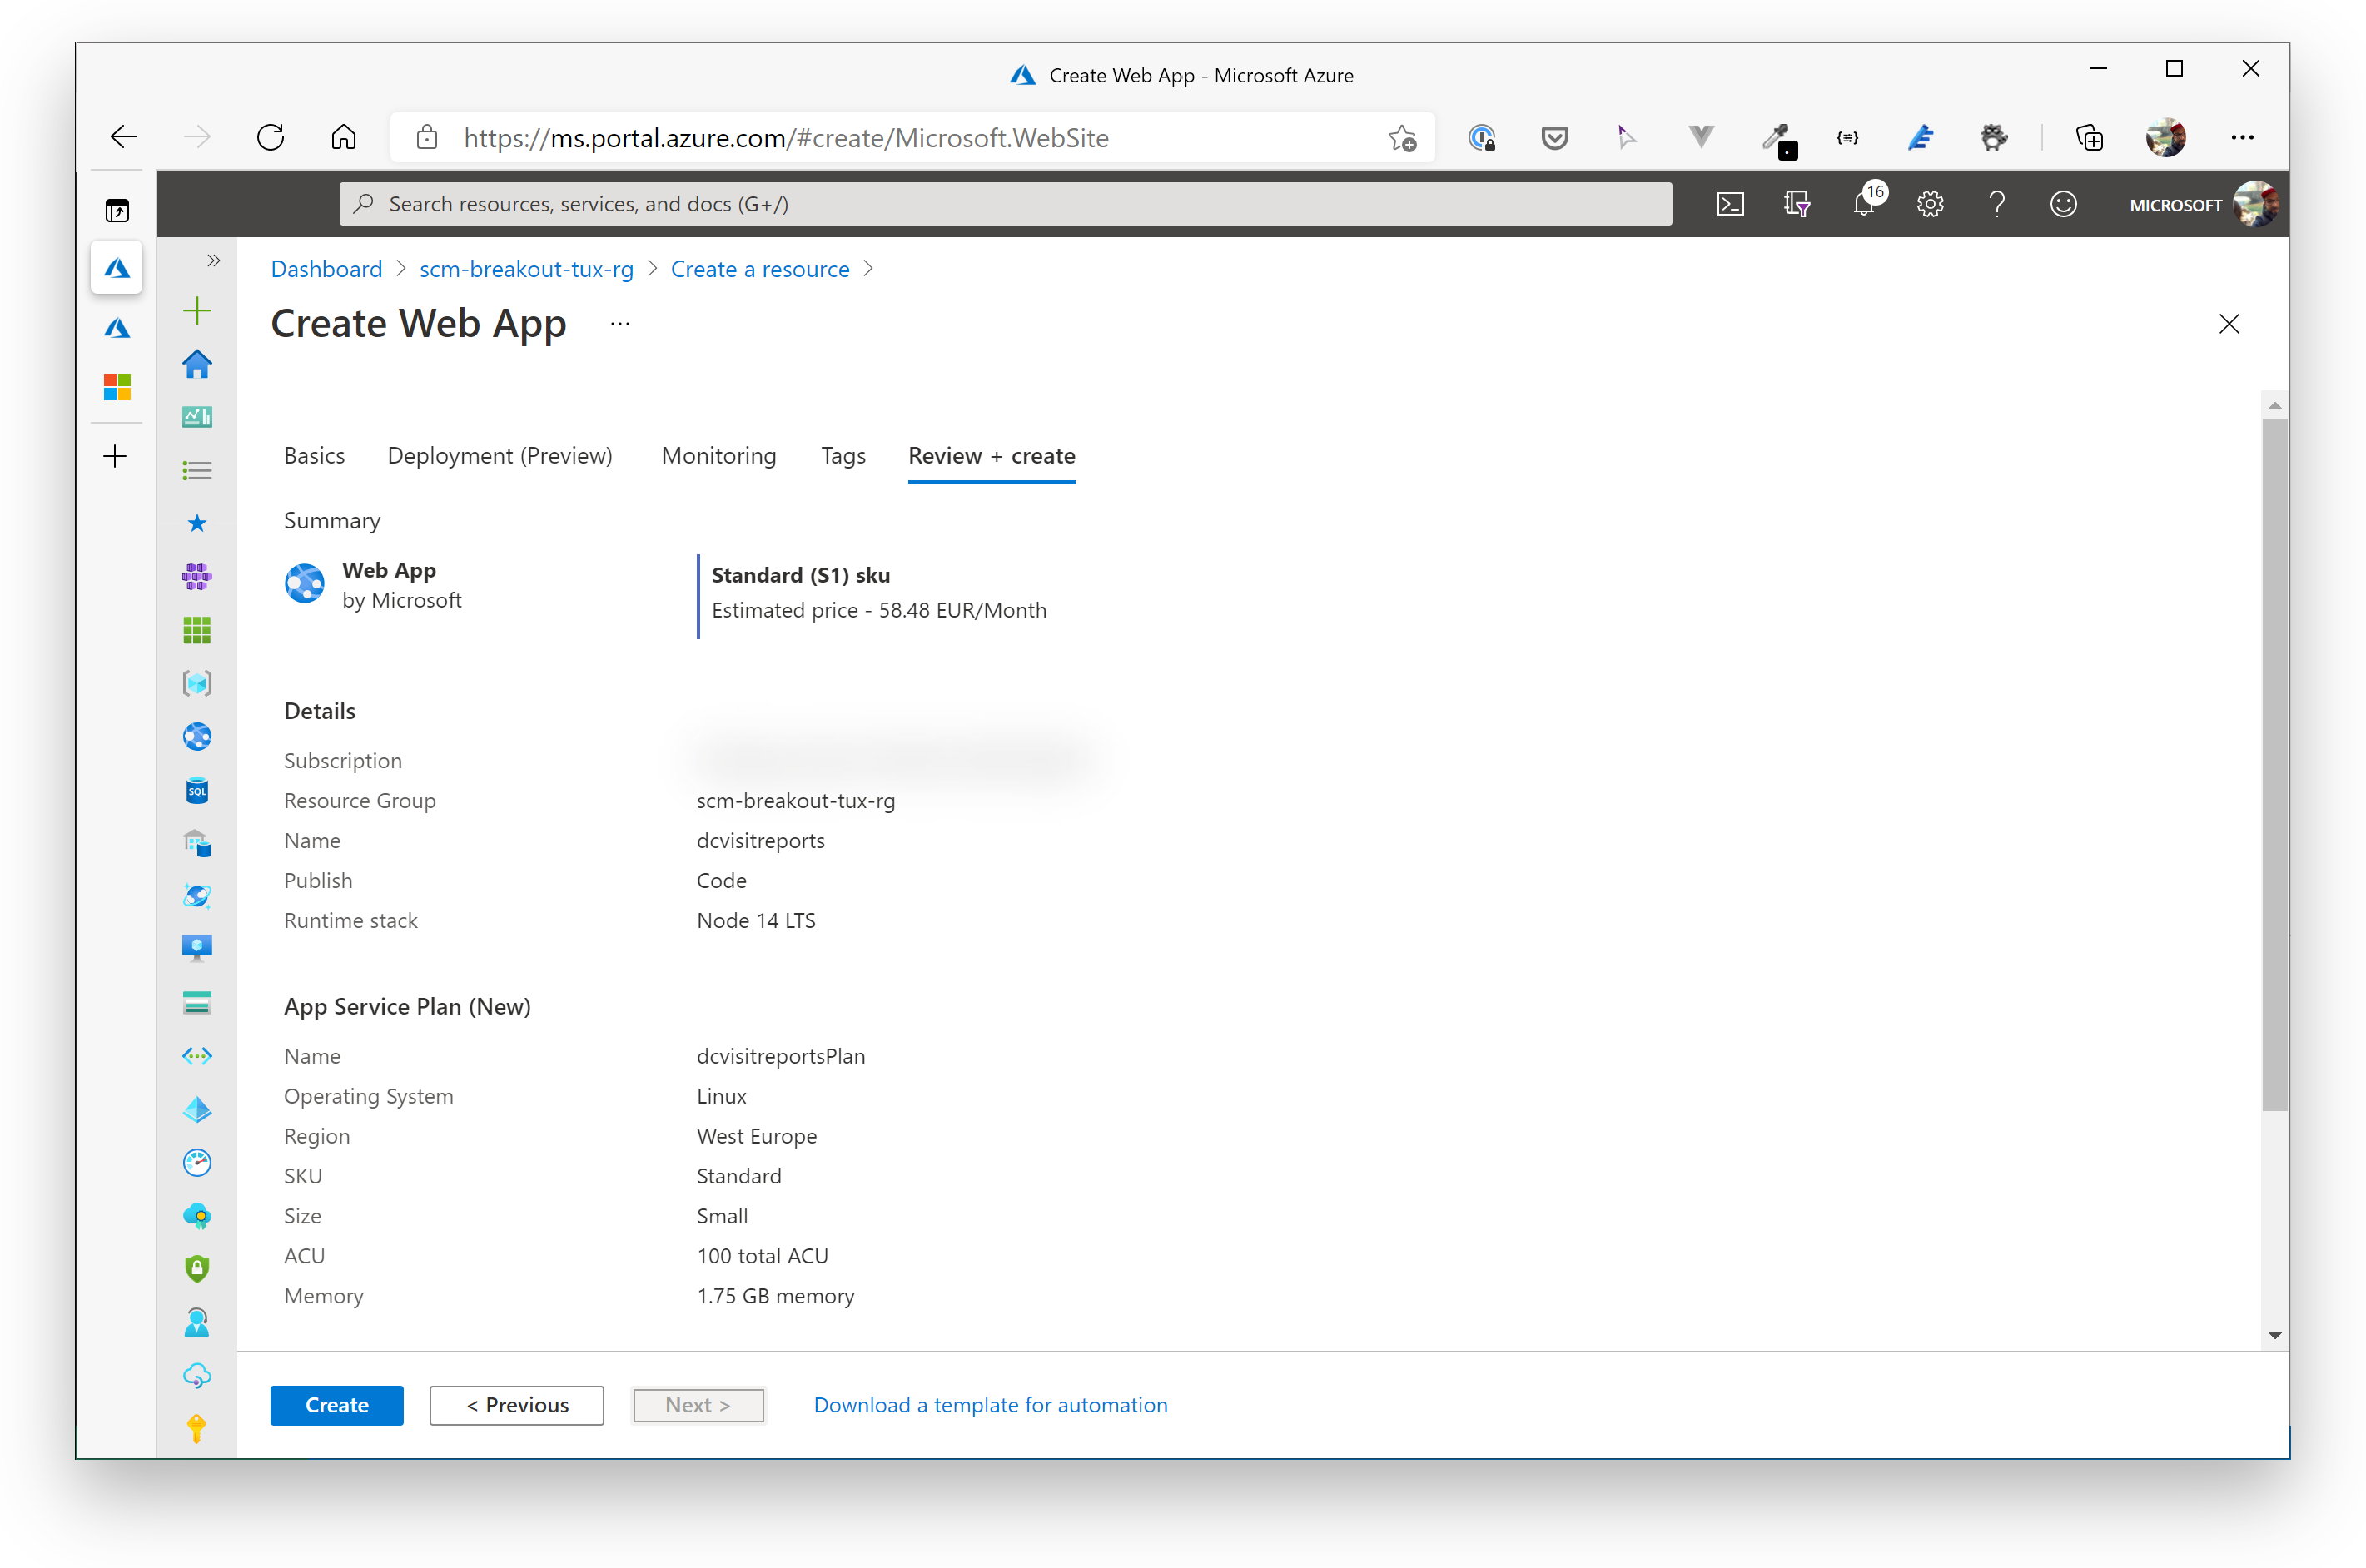 Visit Reports API AppService